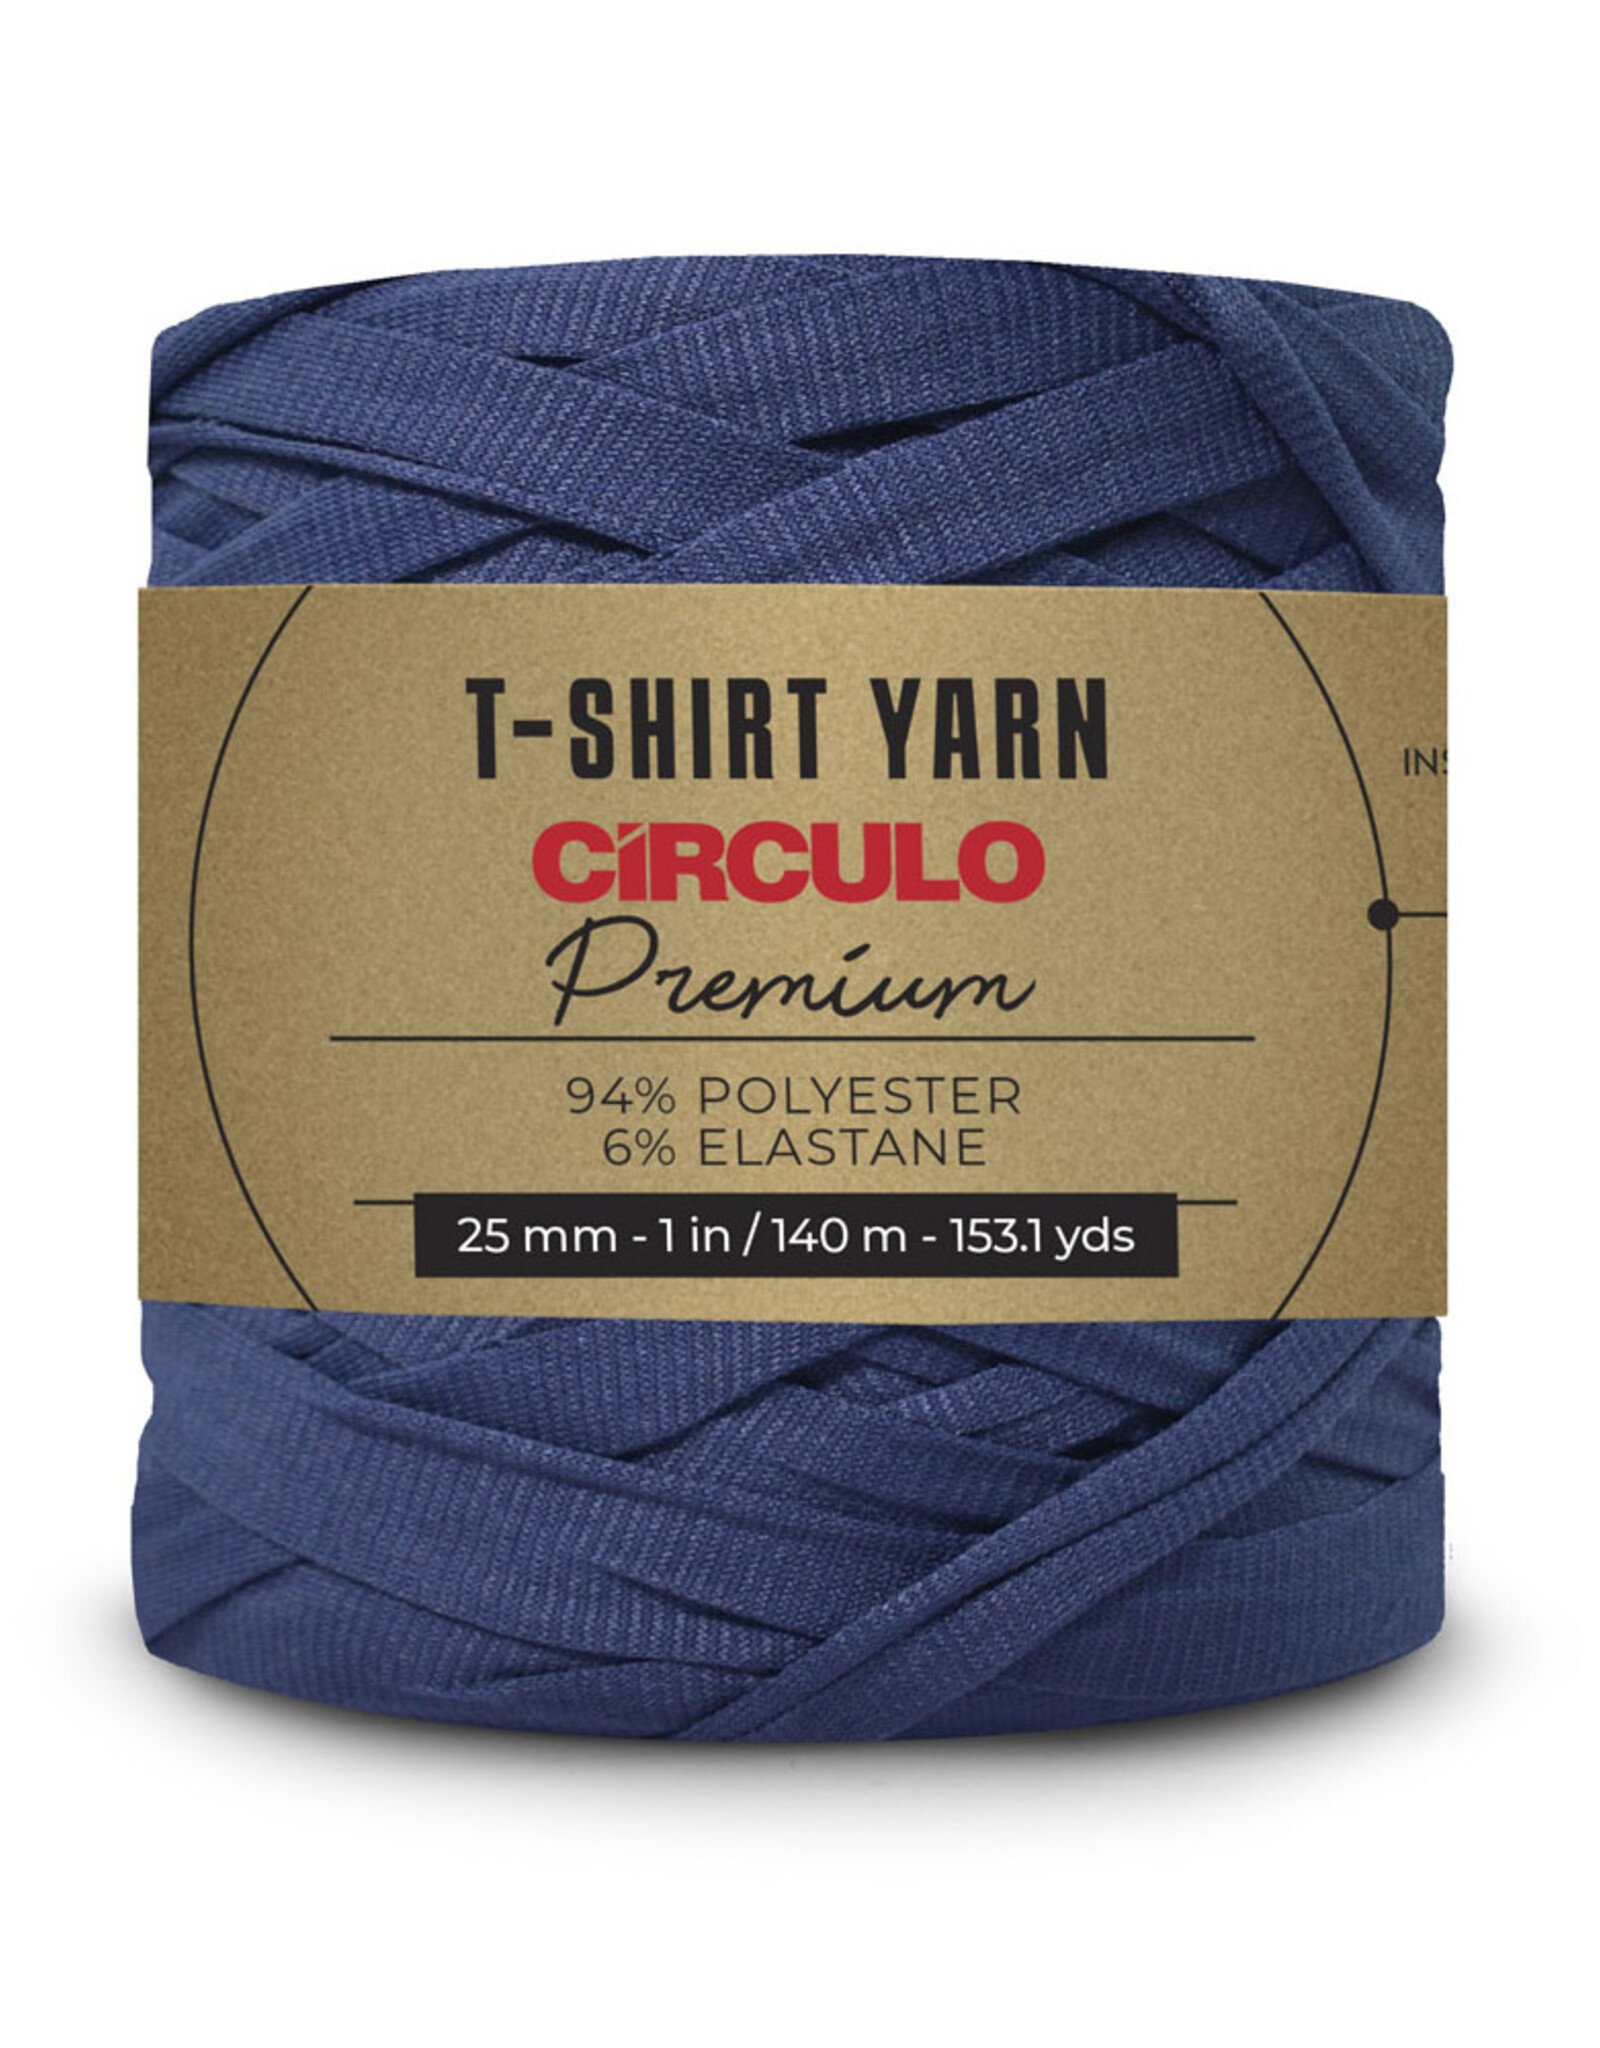 Circulo Premium TShirt Yarn